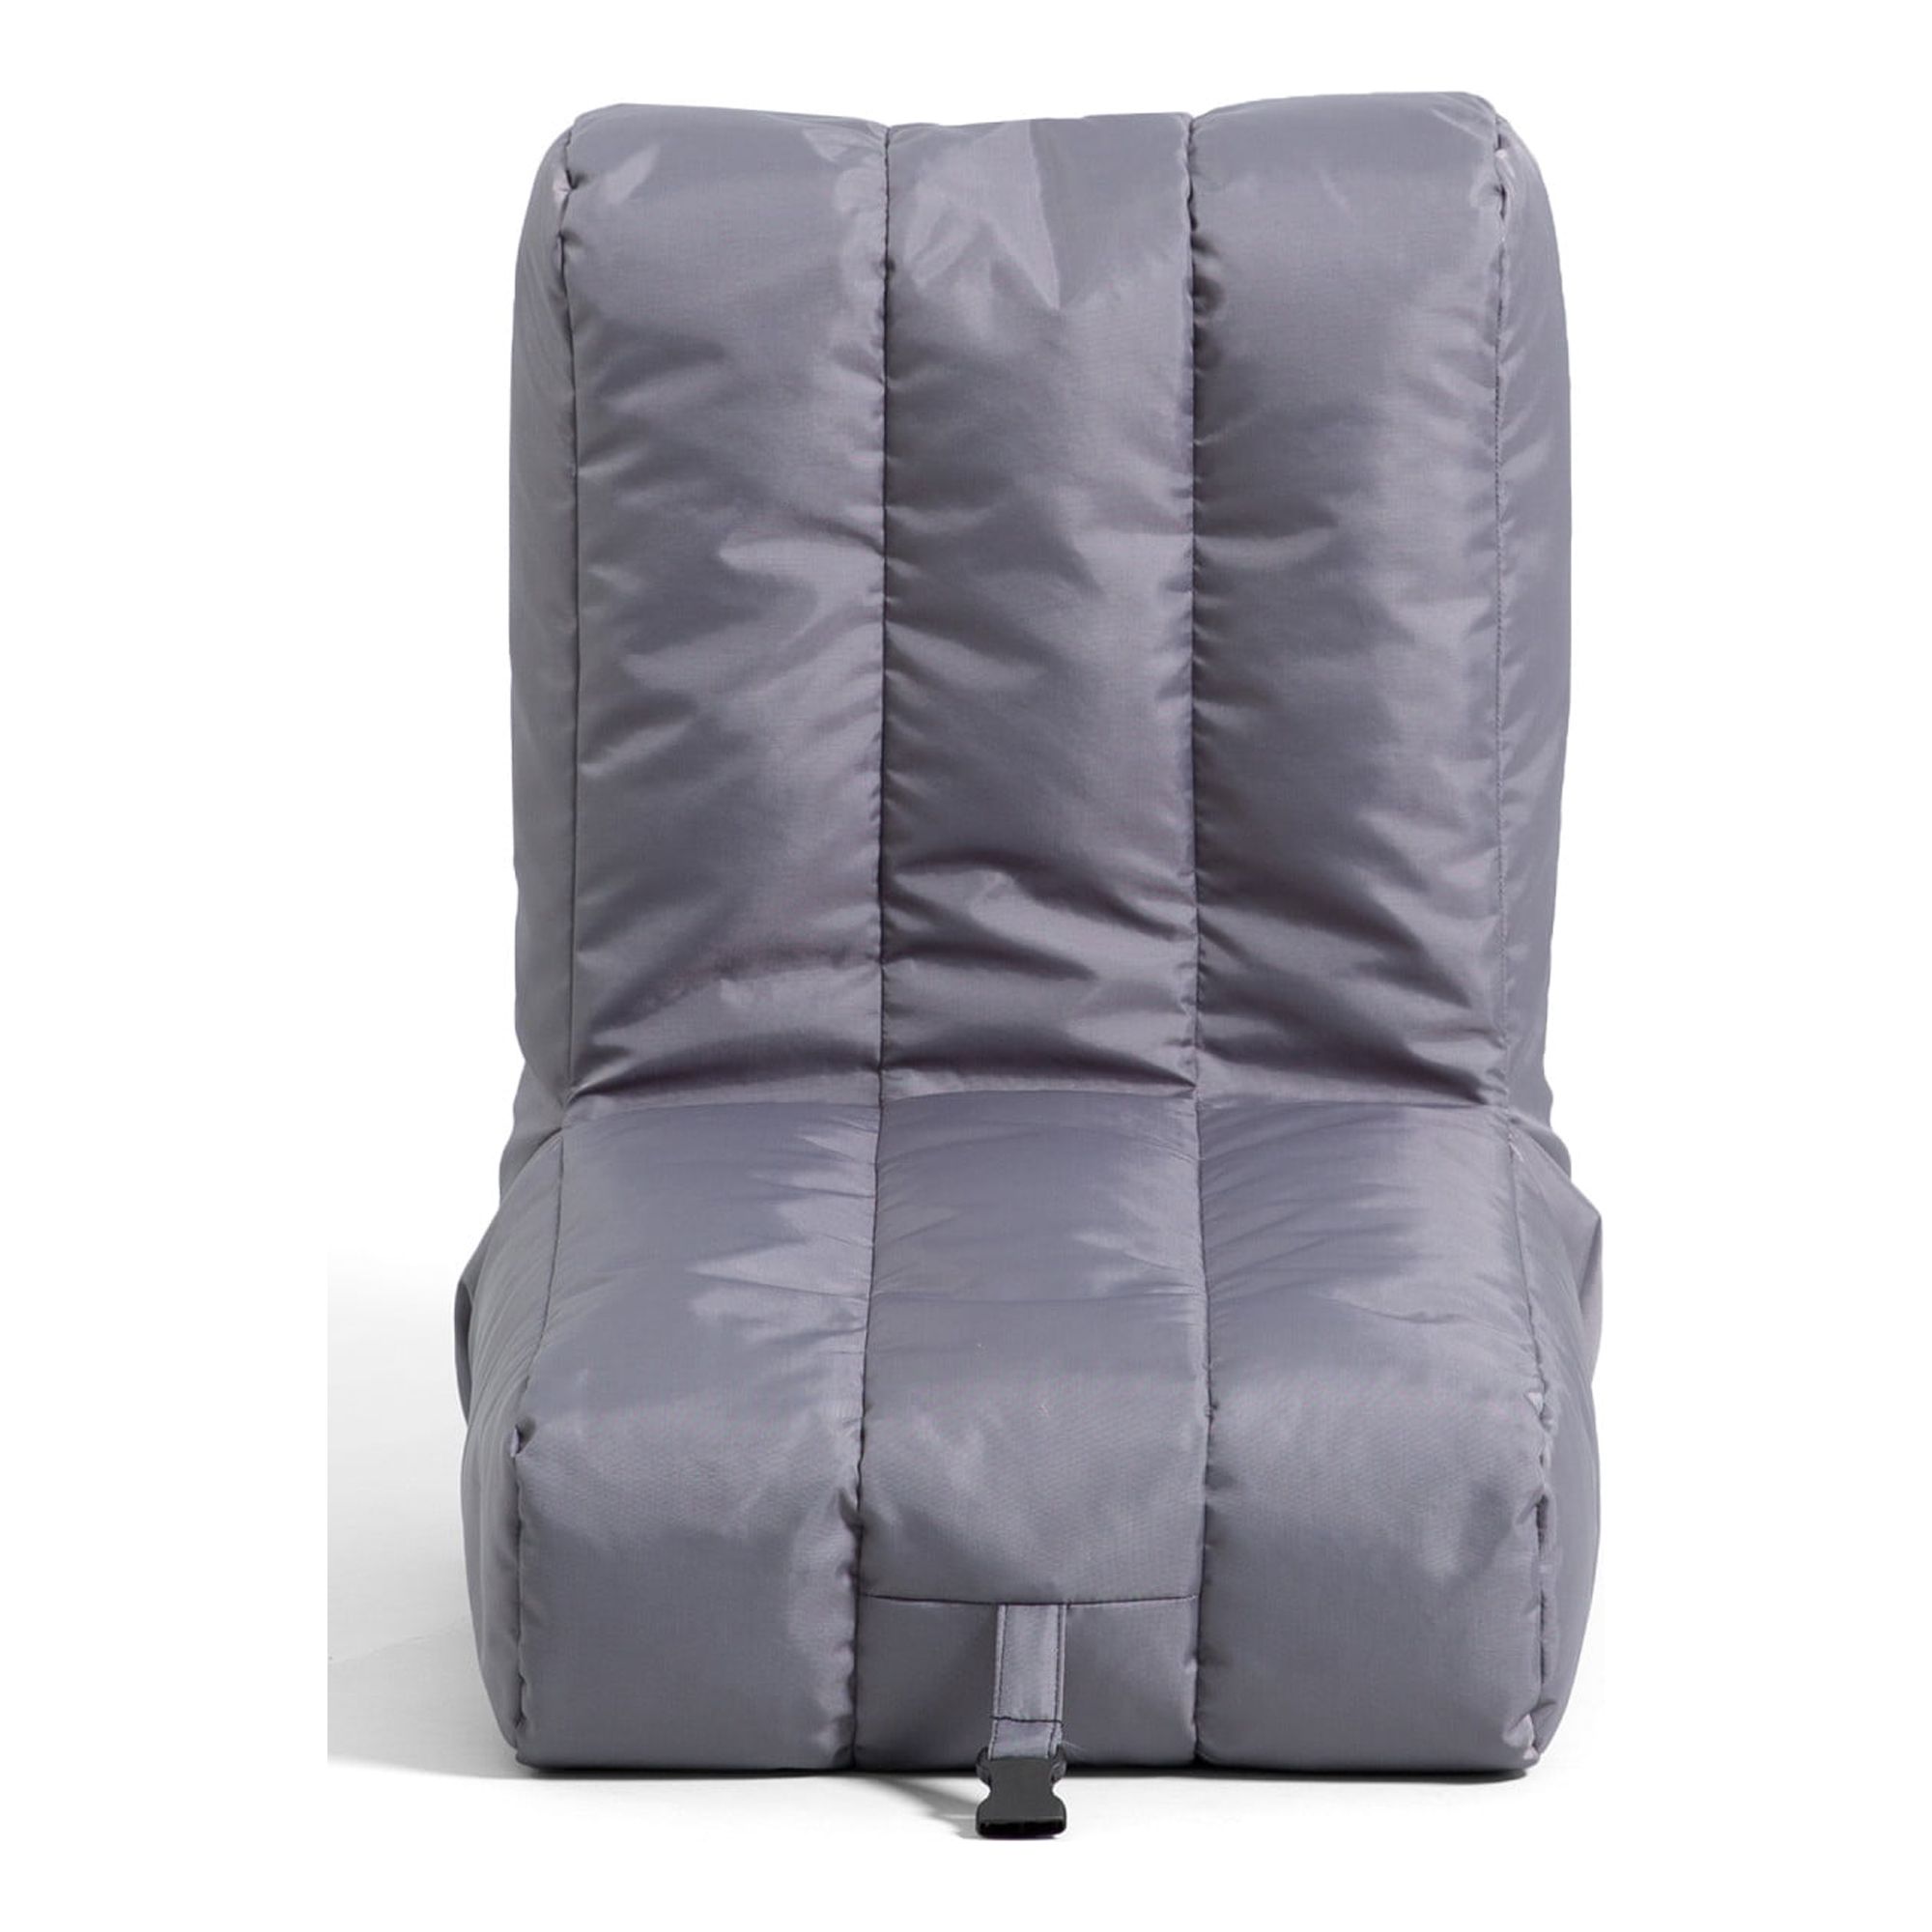 Big Joe Grab & Go Travel Bean Bag Chair, Steel Gray SmartMax, Durable Polyester Nylon Blend, 1.5 feet - image 1 of 9